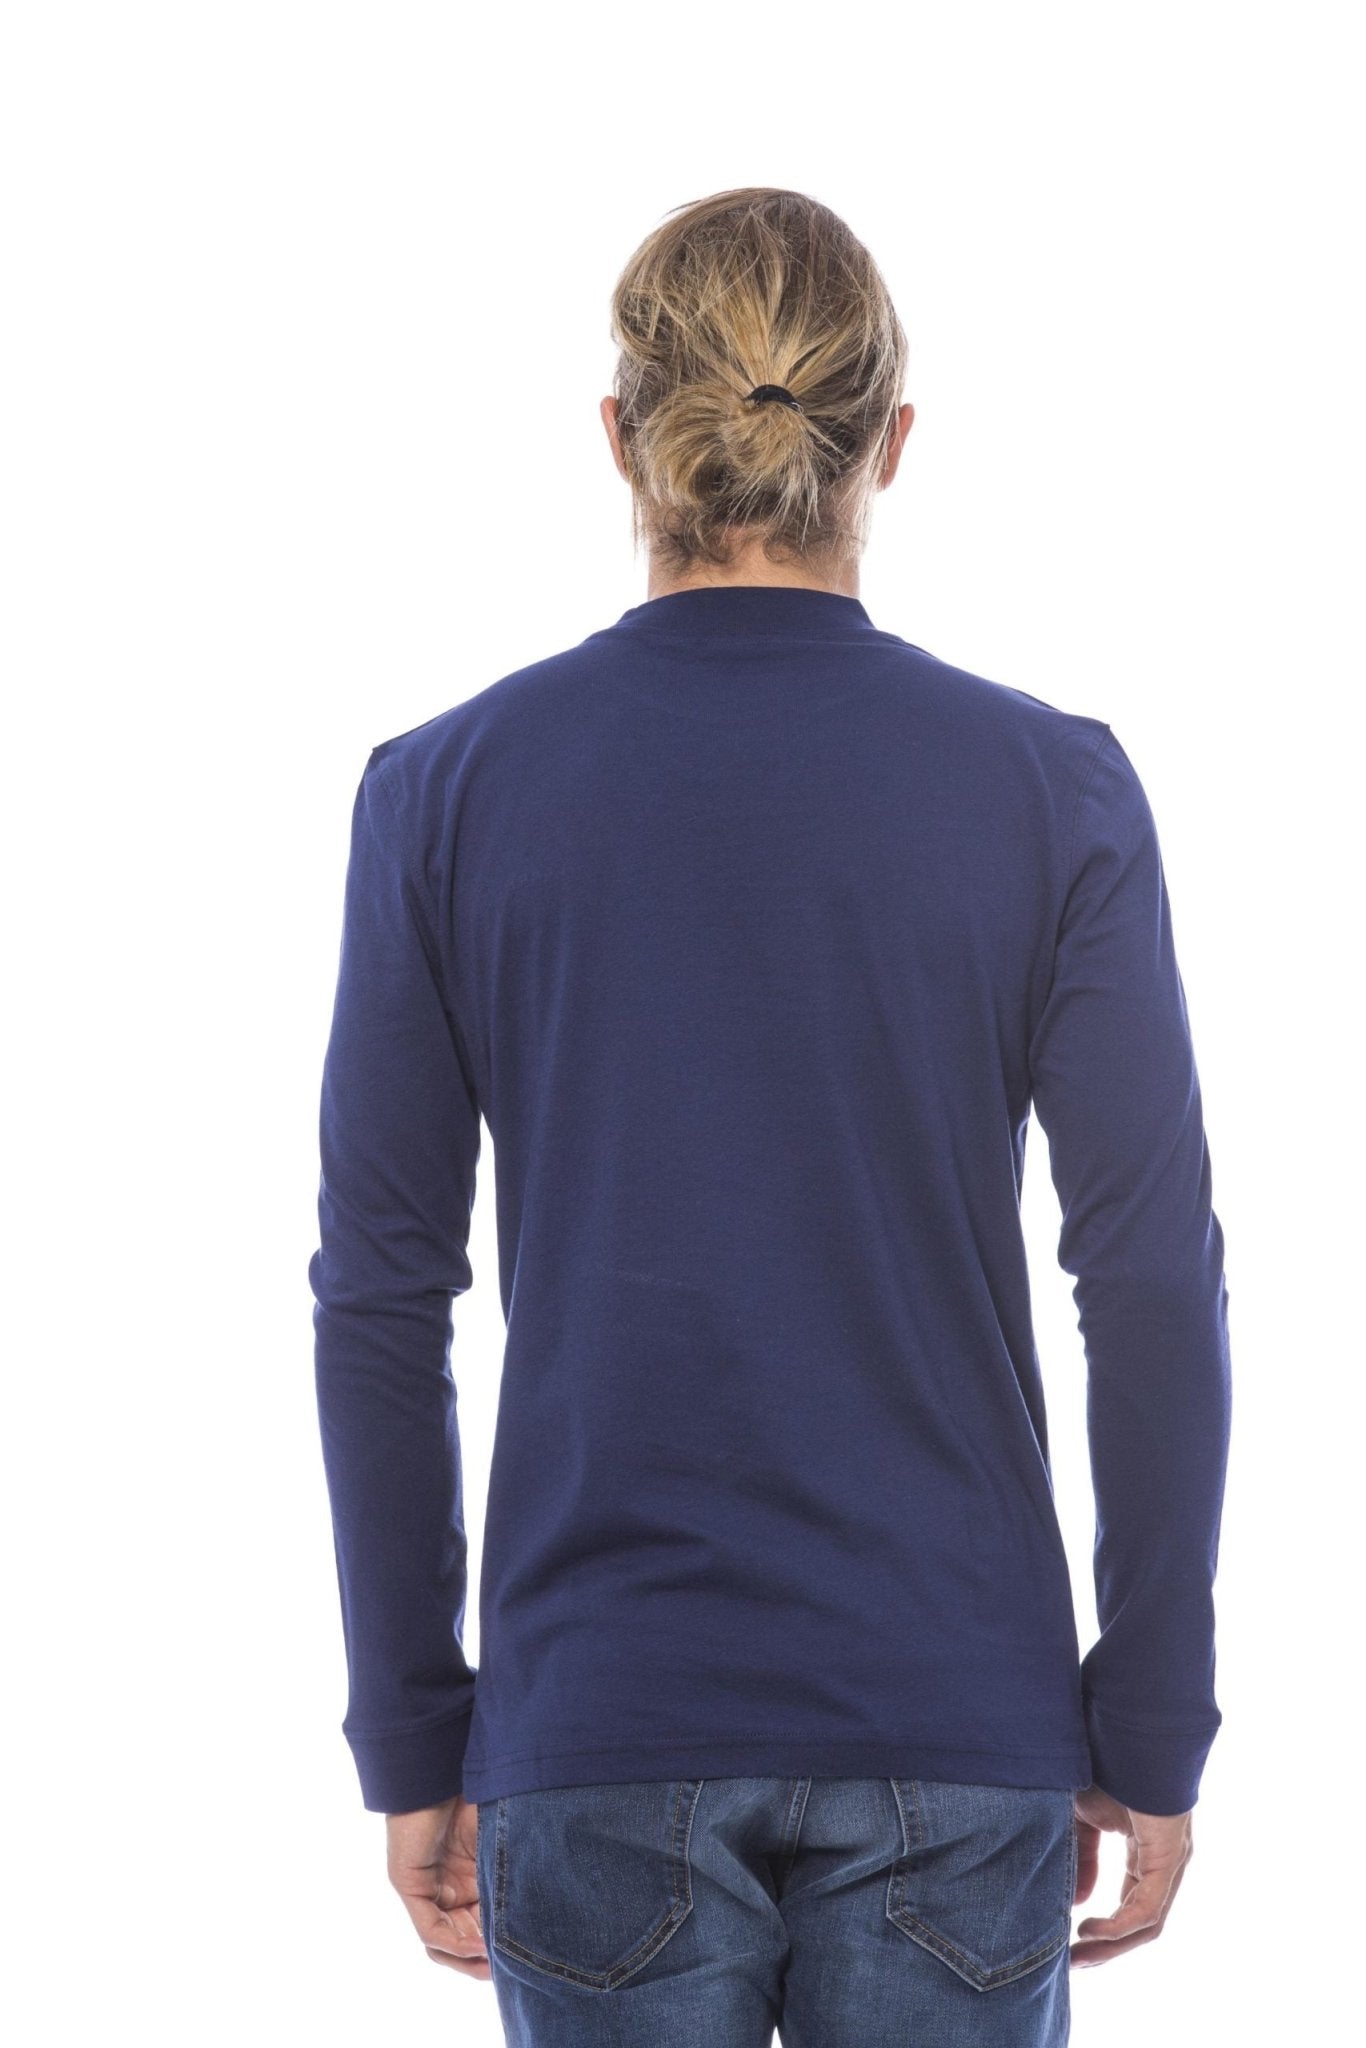 Verri Blue Cotton Sweater - Fizigo